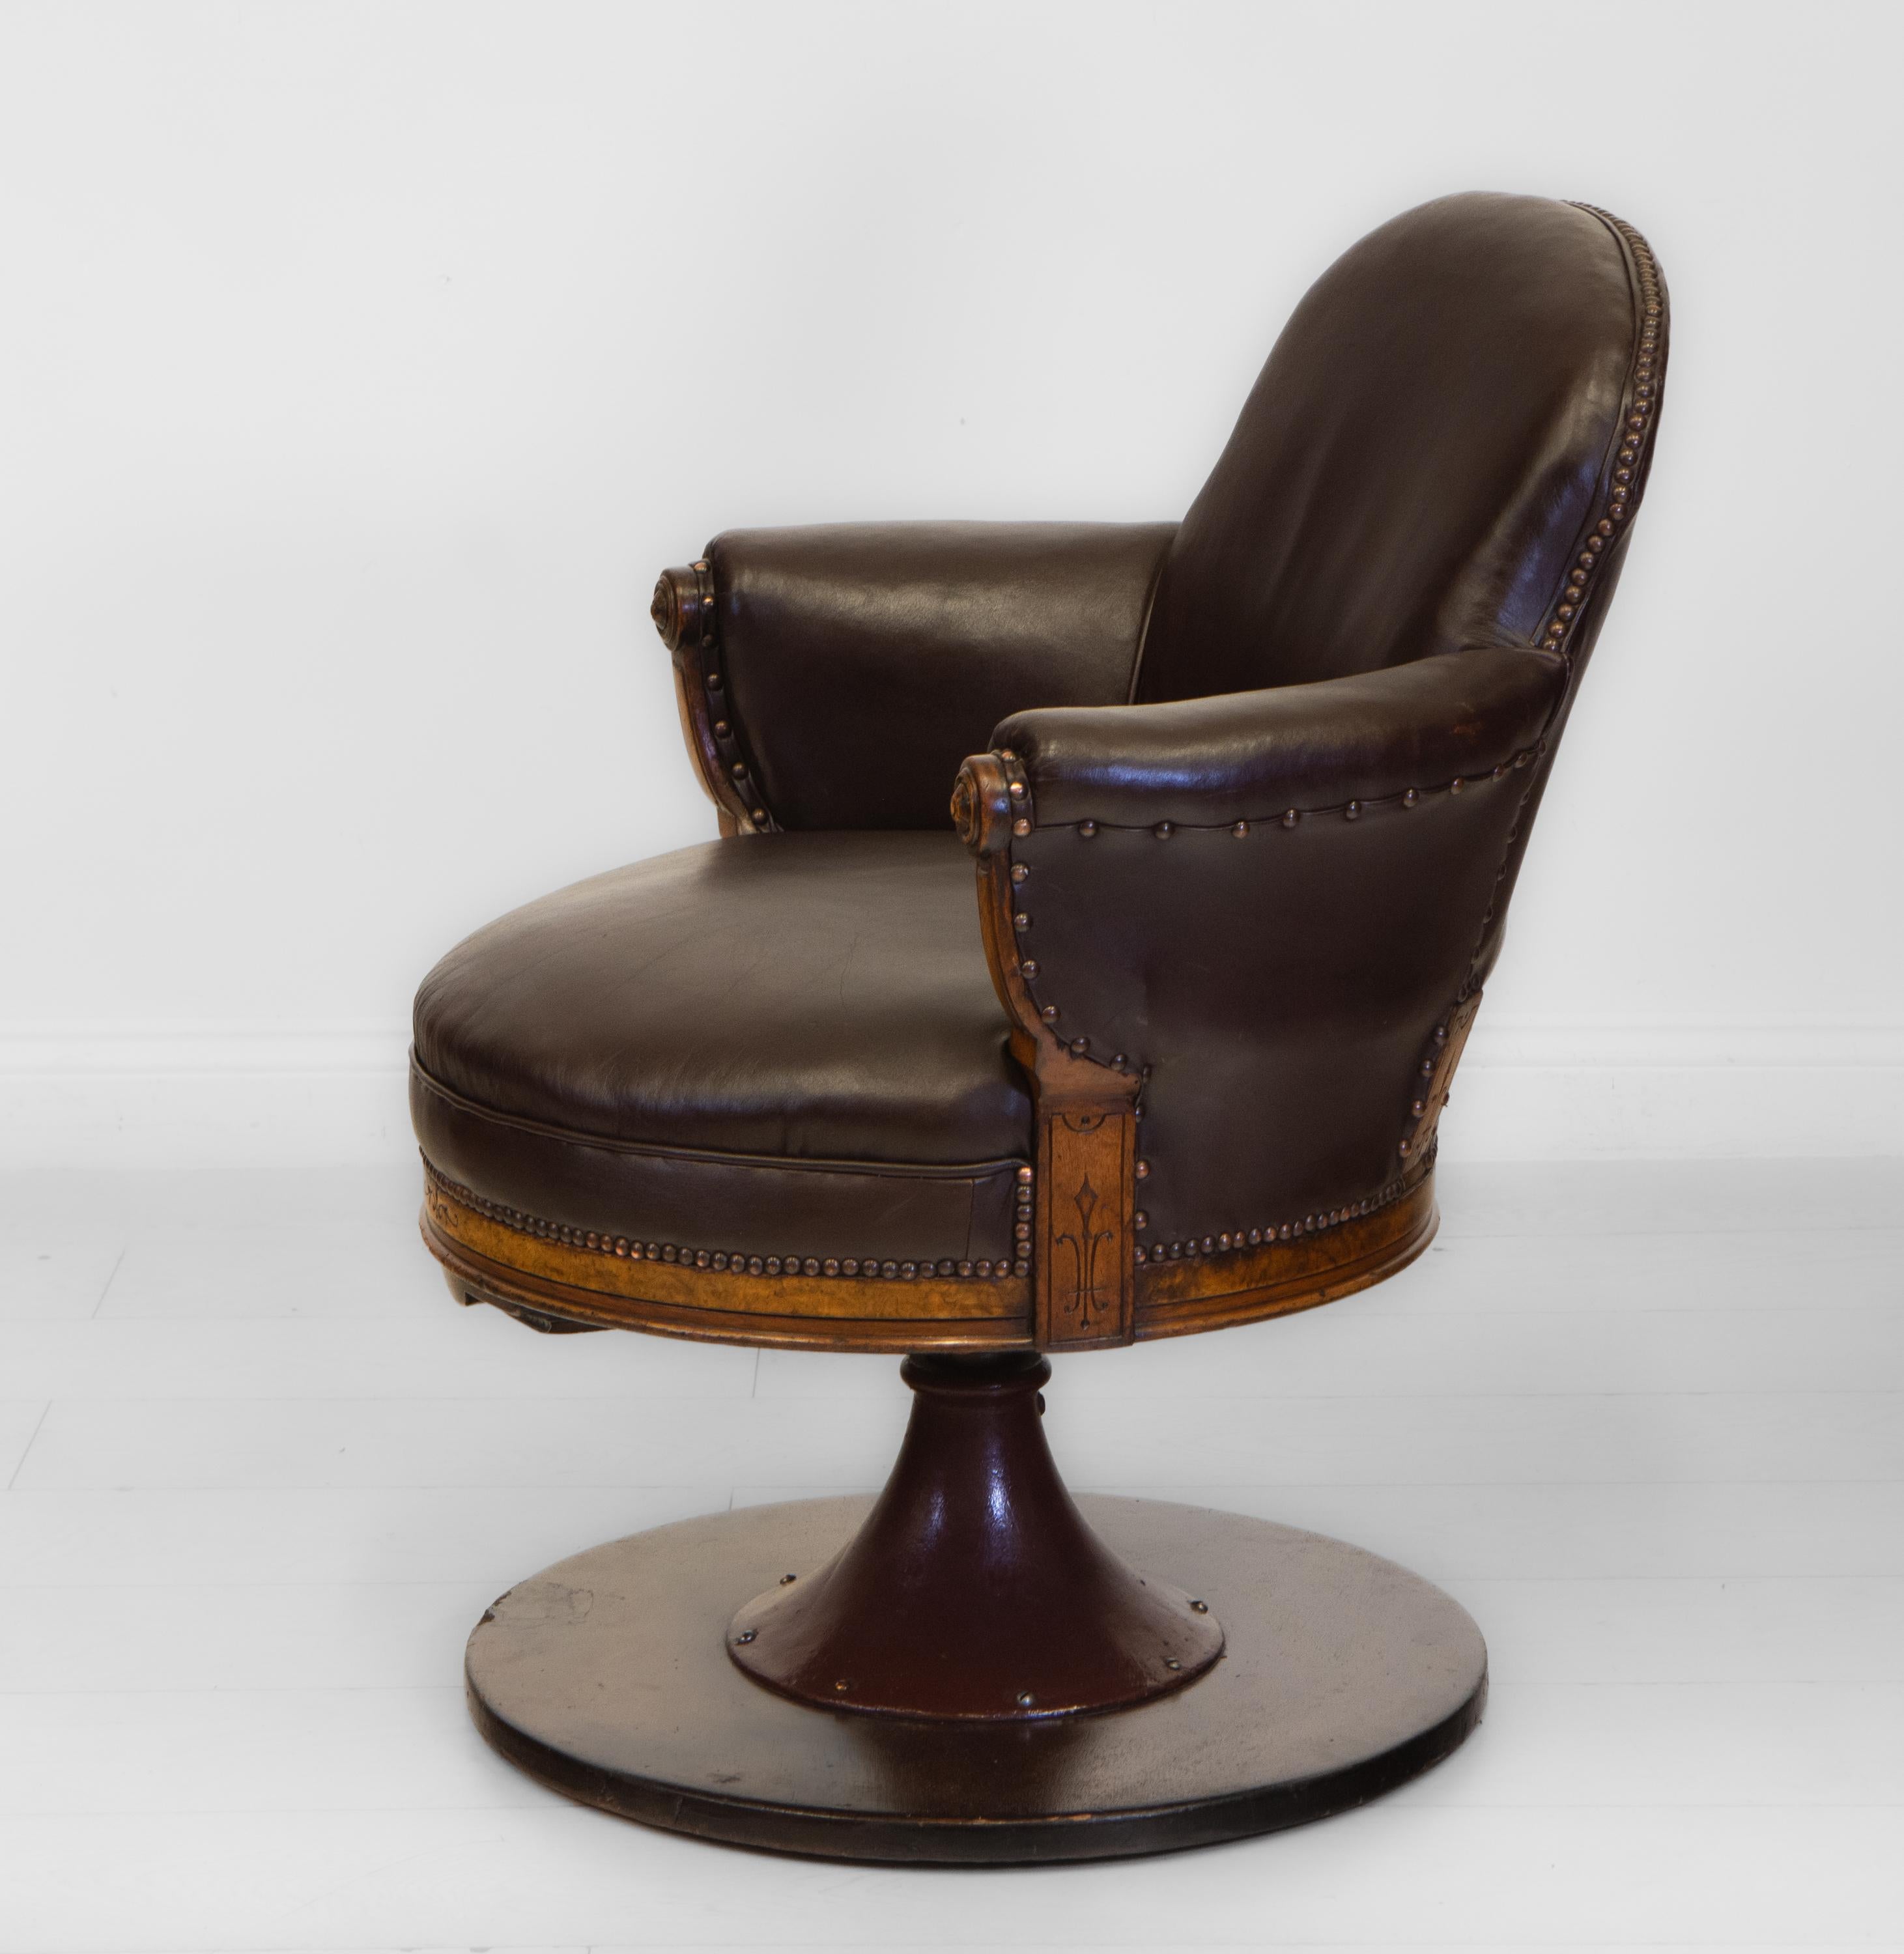 Victorian Rare English 19th Century Leather & Walnut Swivel Railway Pullman Club Chair